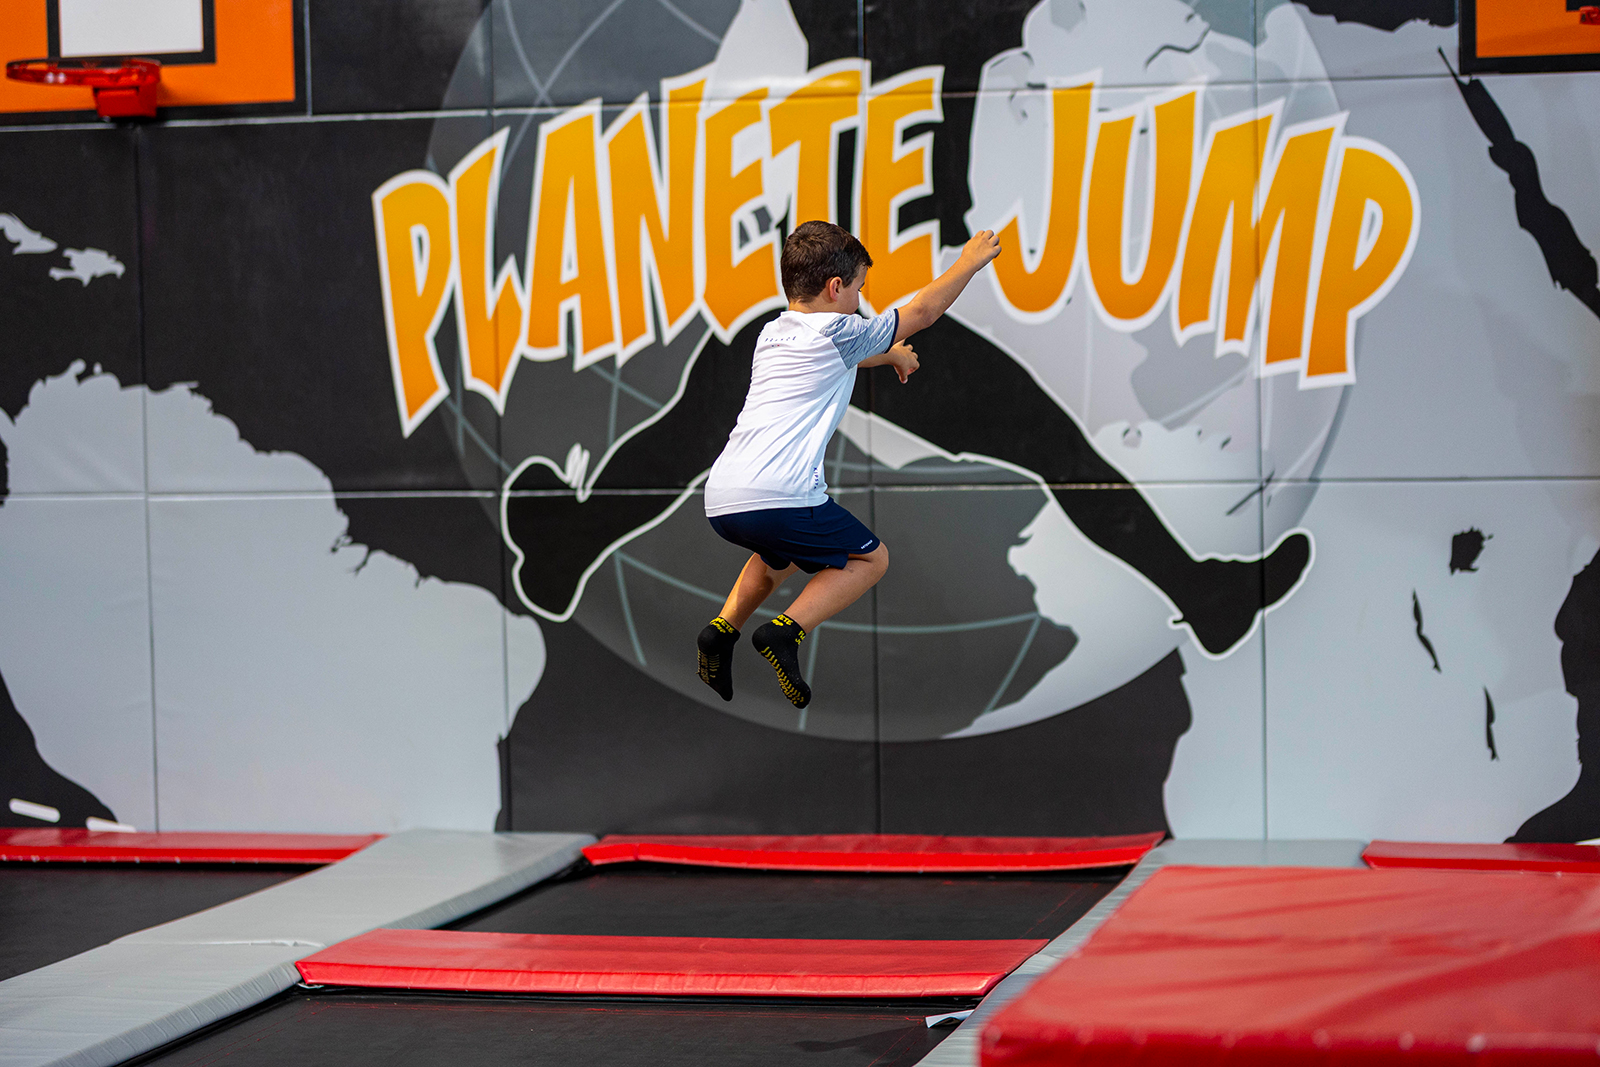 Planete Jump